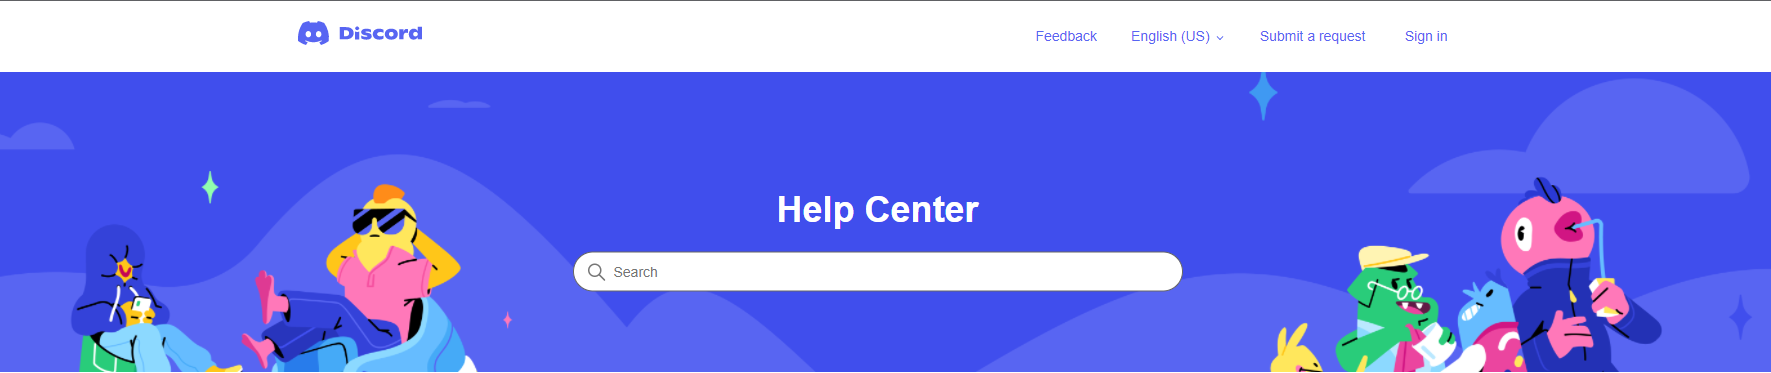 Discord Help Center